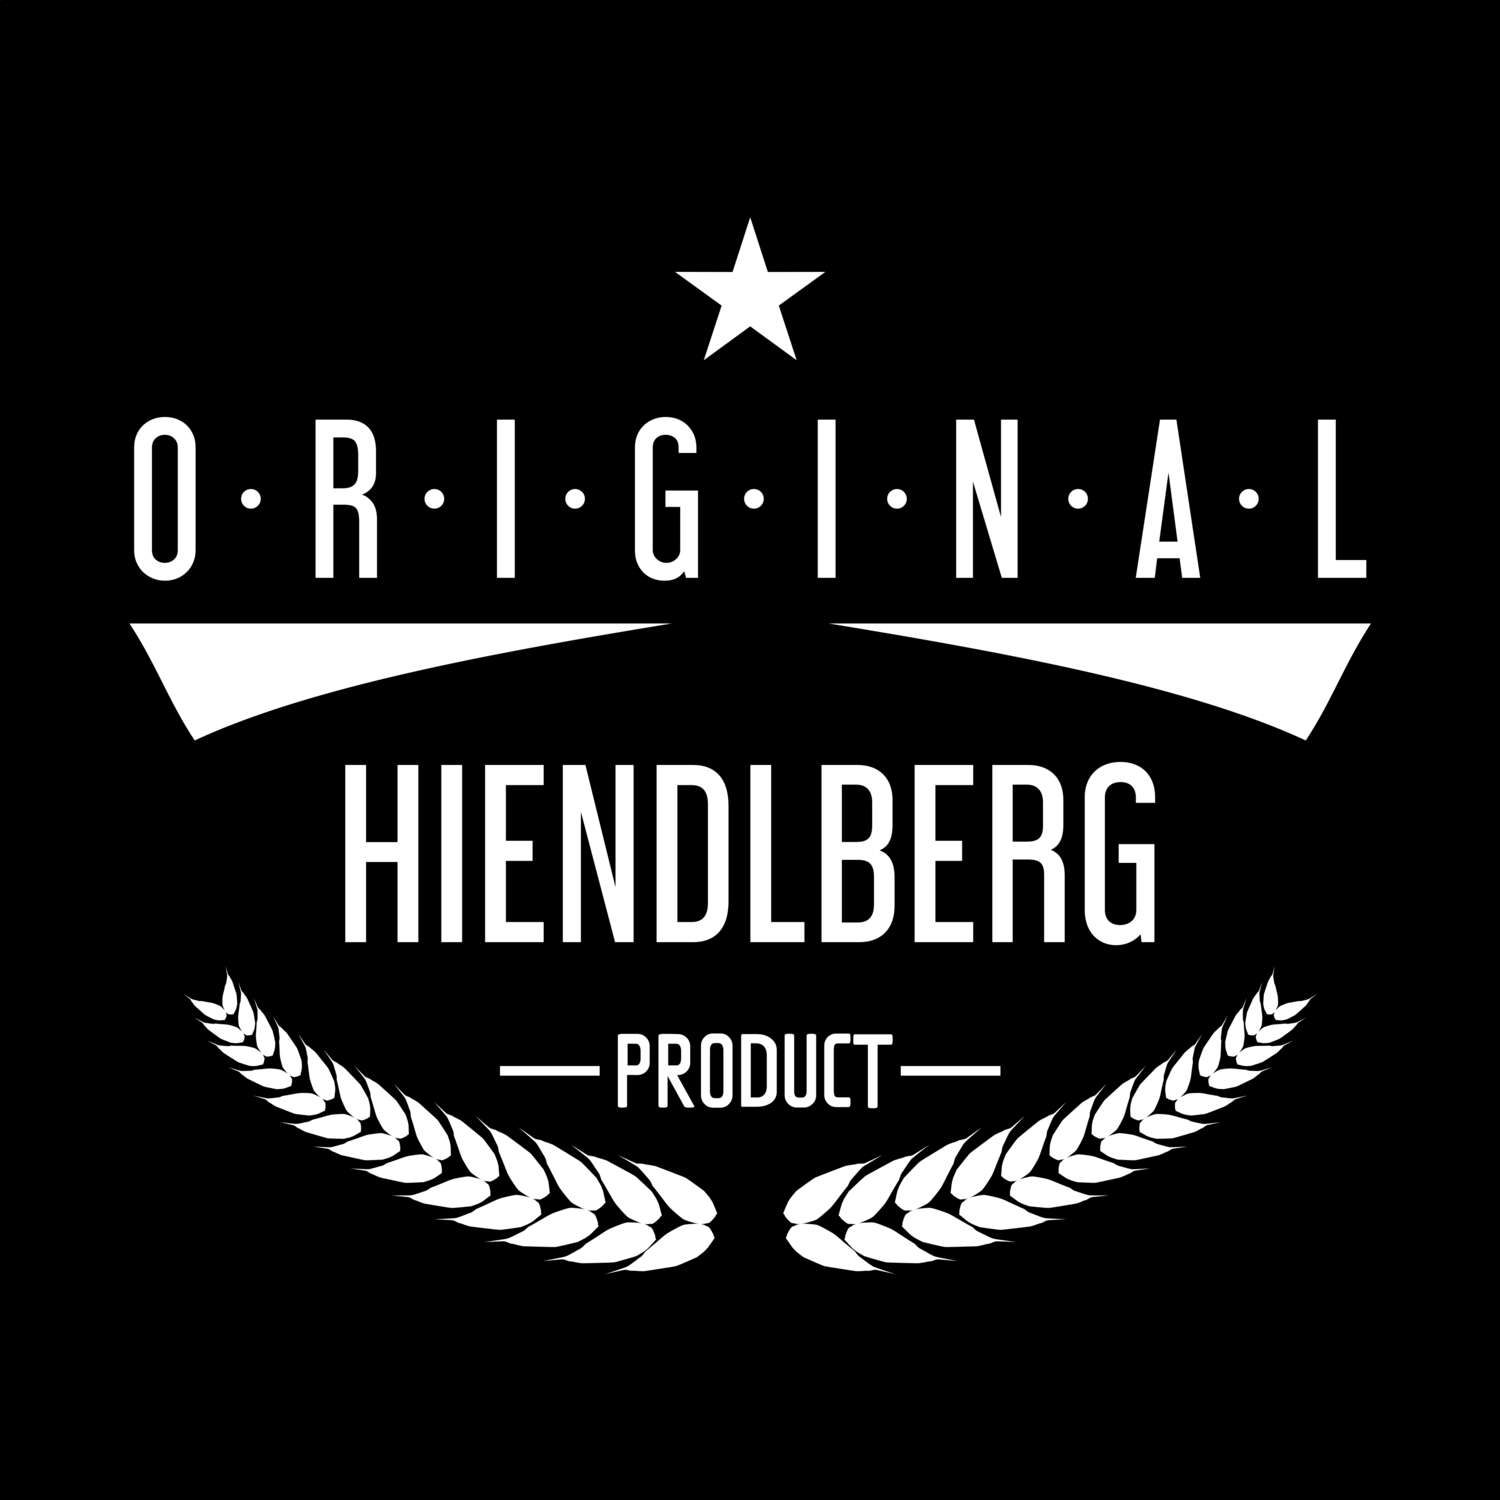 Hiendlberg T-Shirt »Original Product«